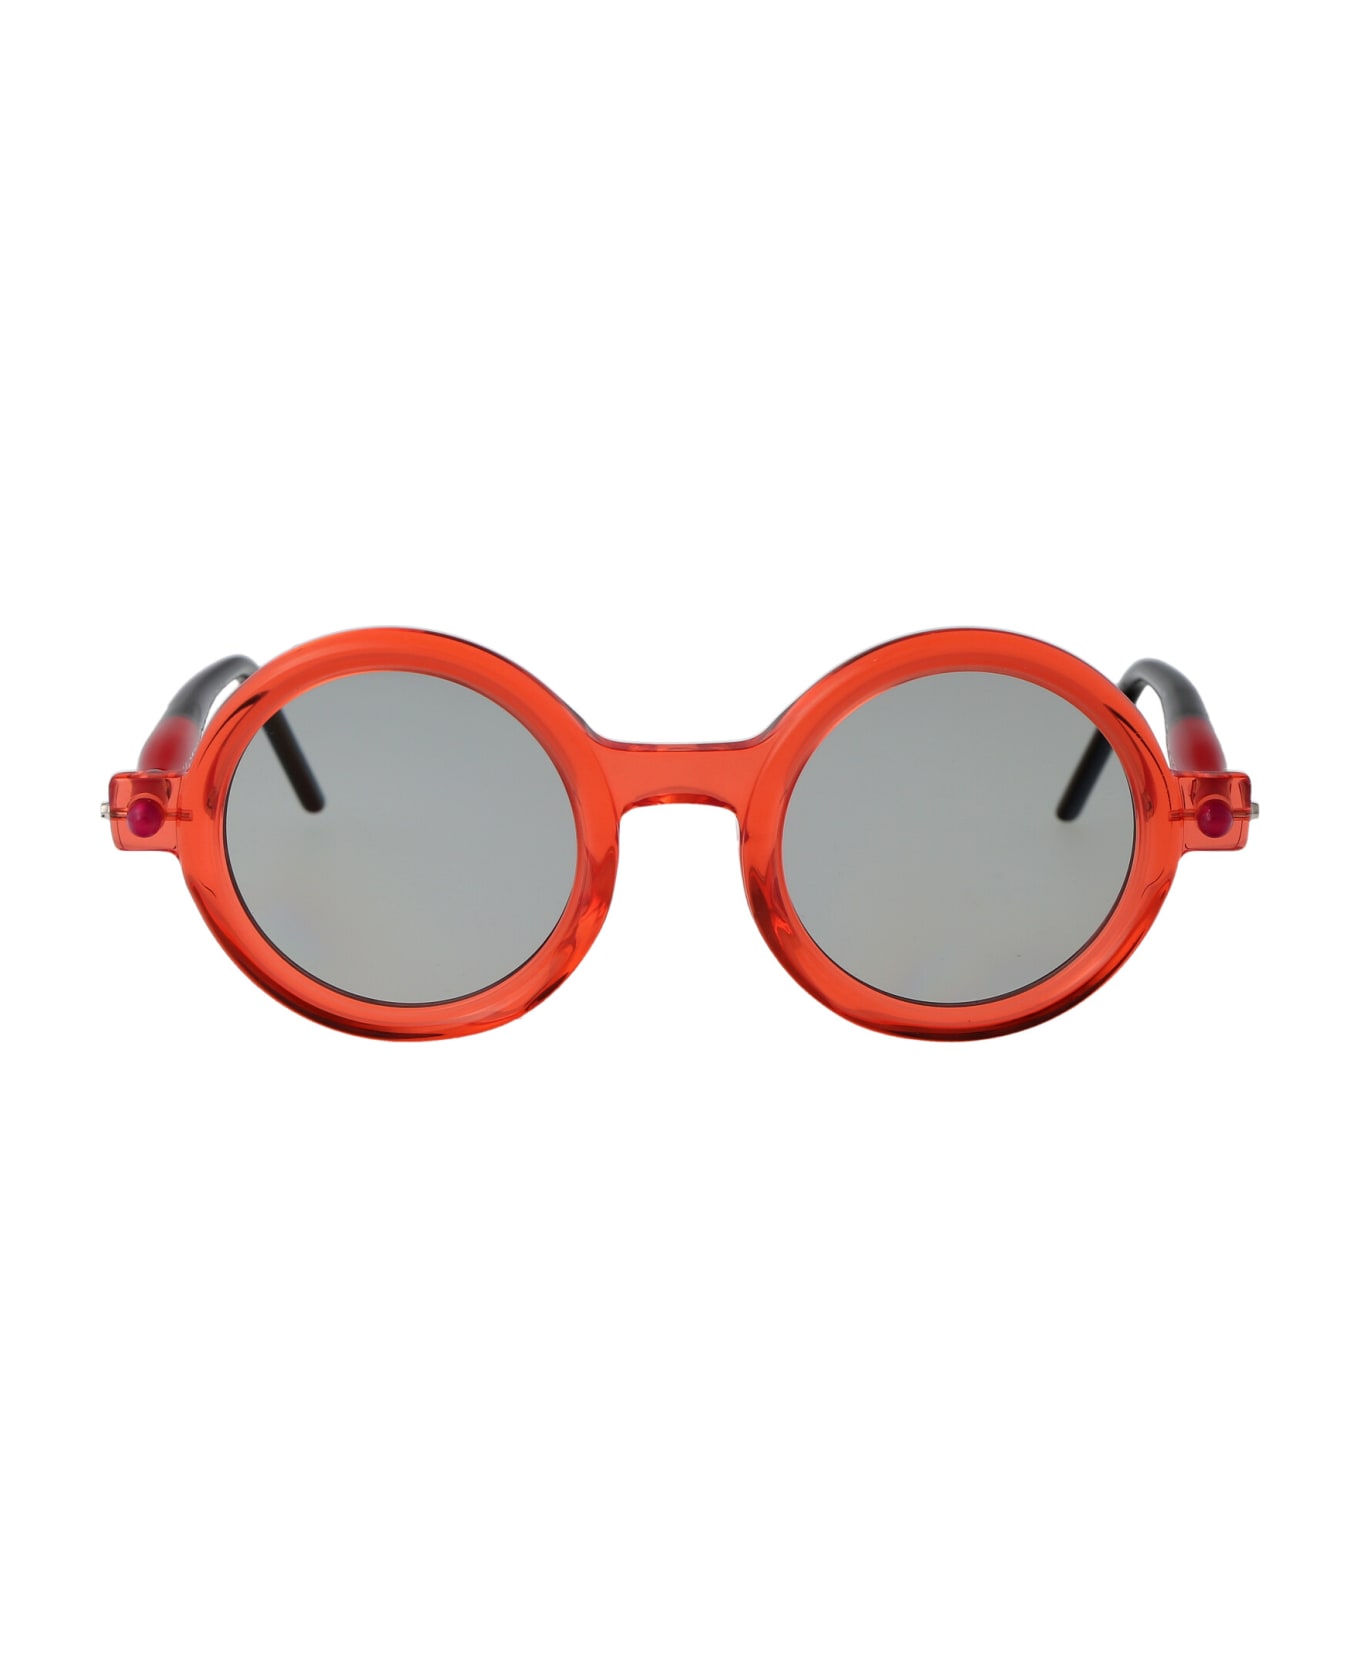 Kuboraum Maske P1 Sunglasses - ORD grey1*